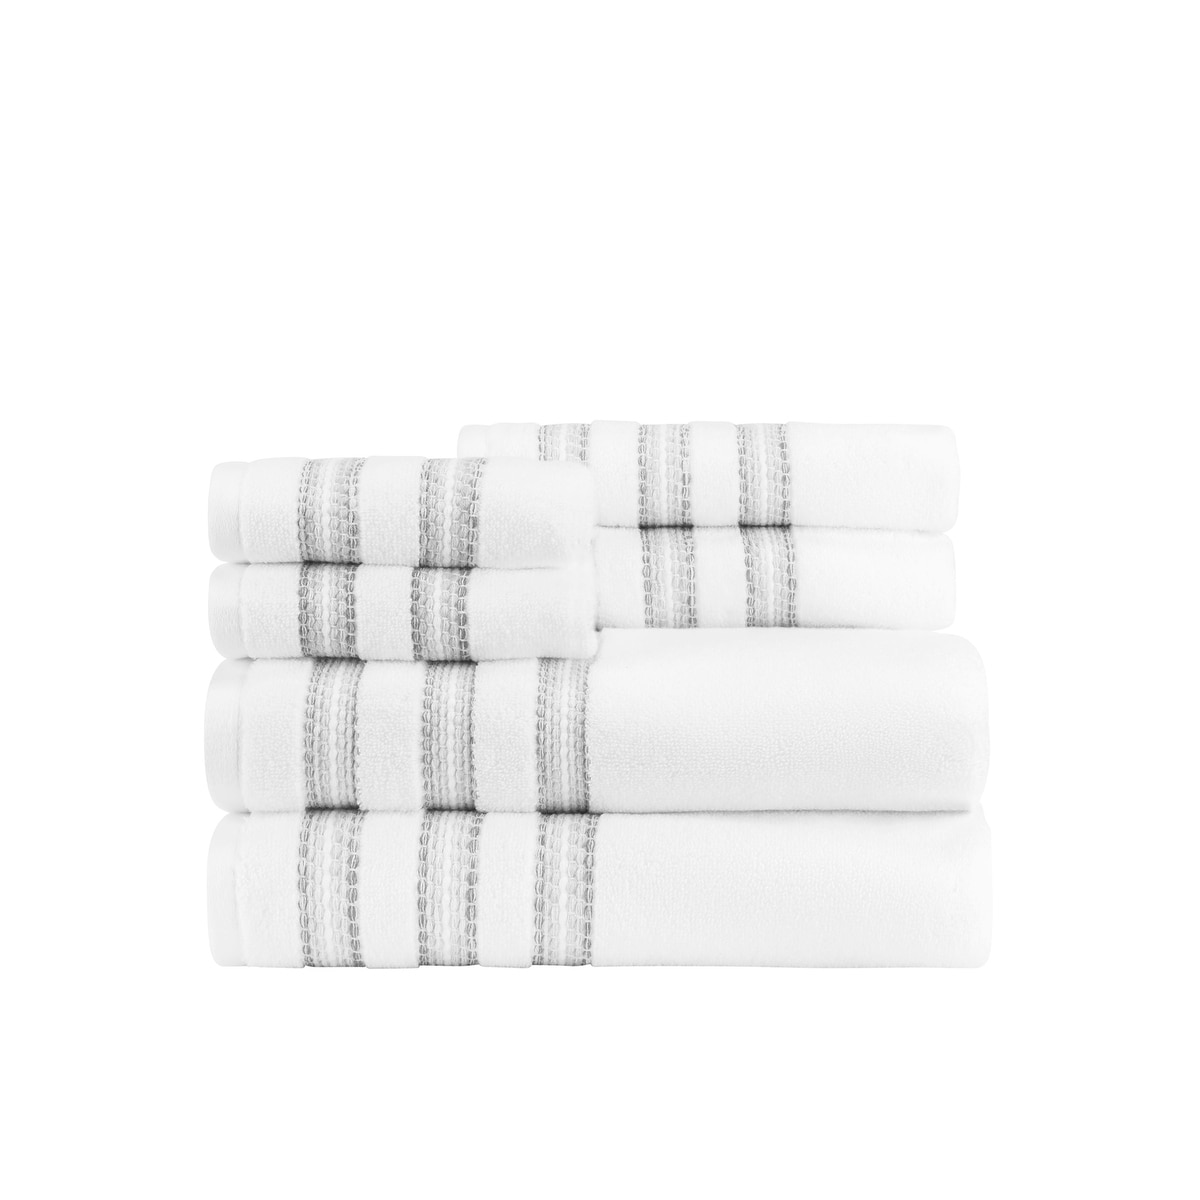 Caro Home, Bath, Caro Home 0 Cotton 6 Pc Towel Set